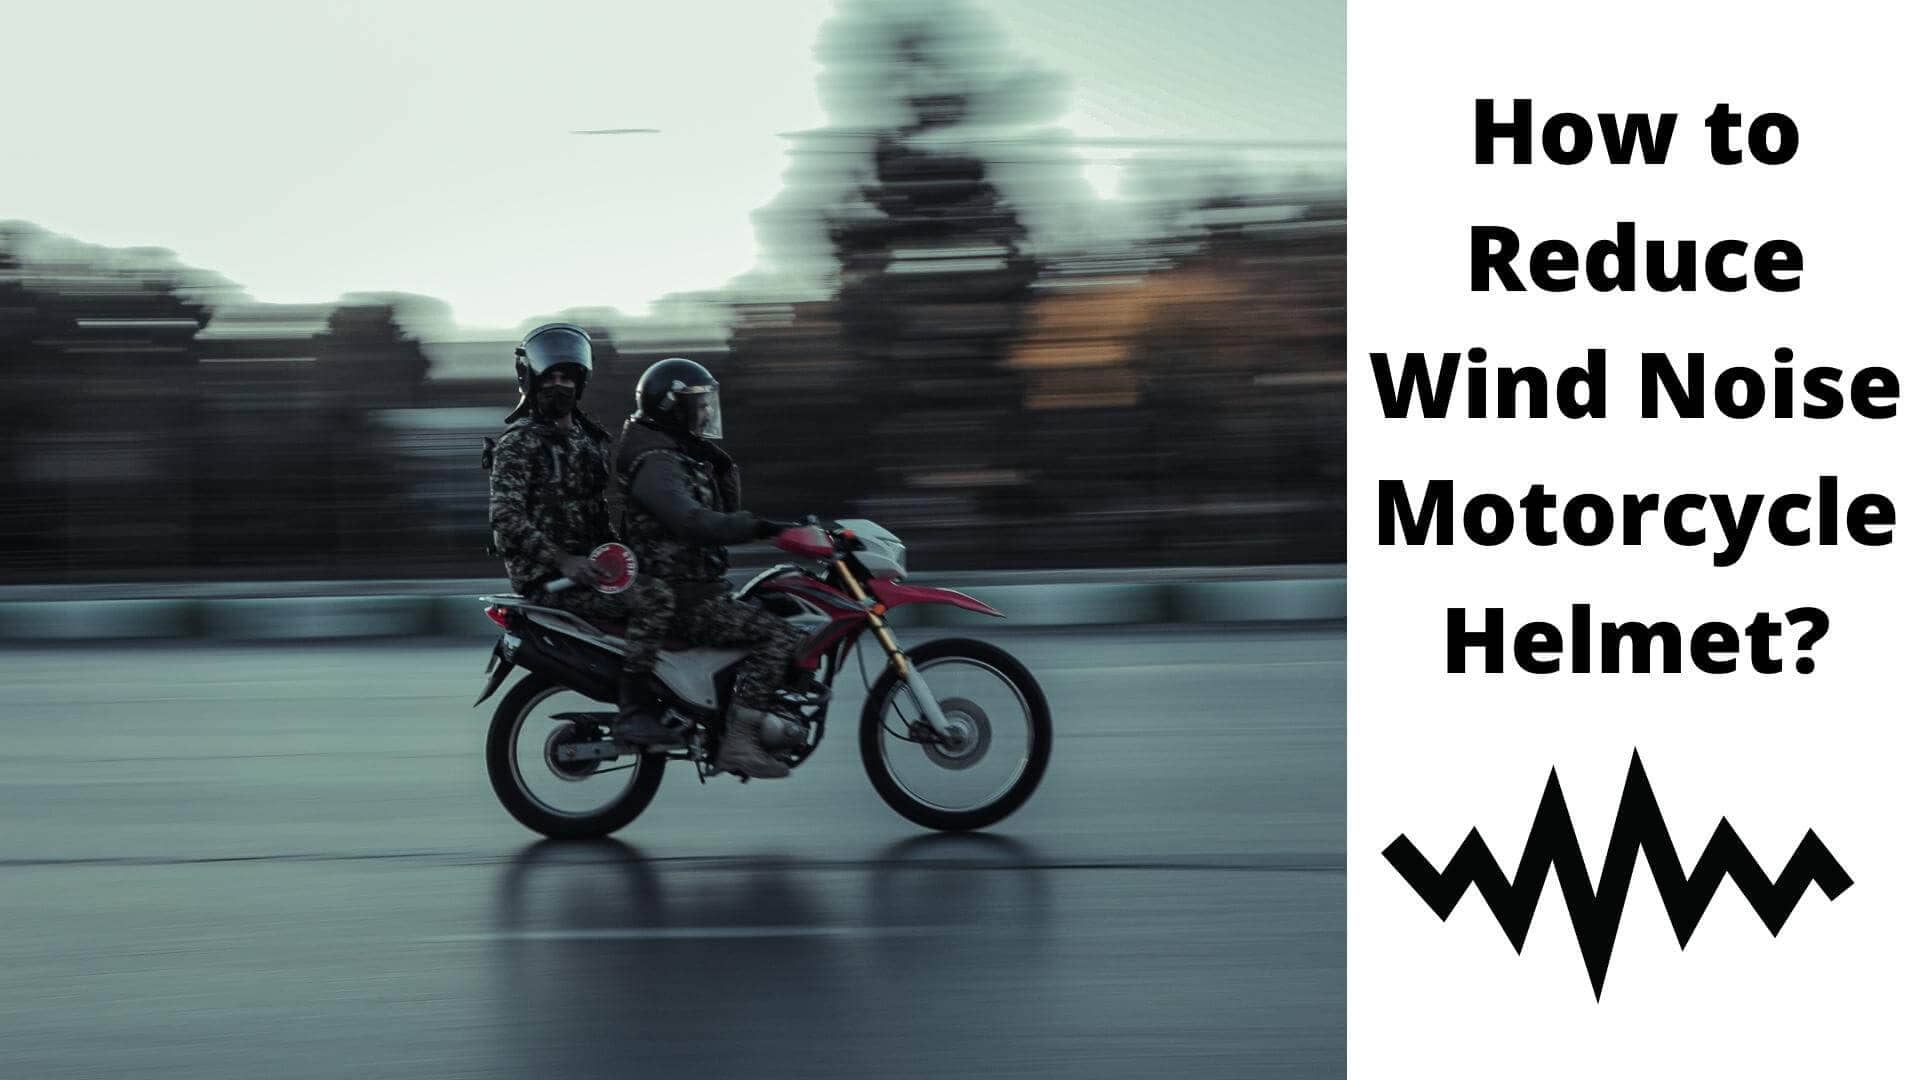 how to reduce wind noise motorcycle helmet?